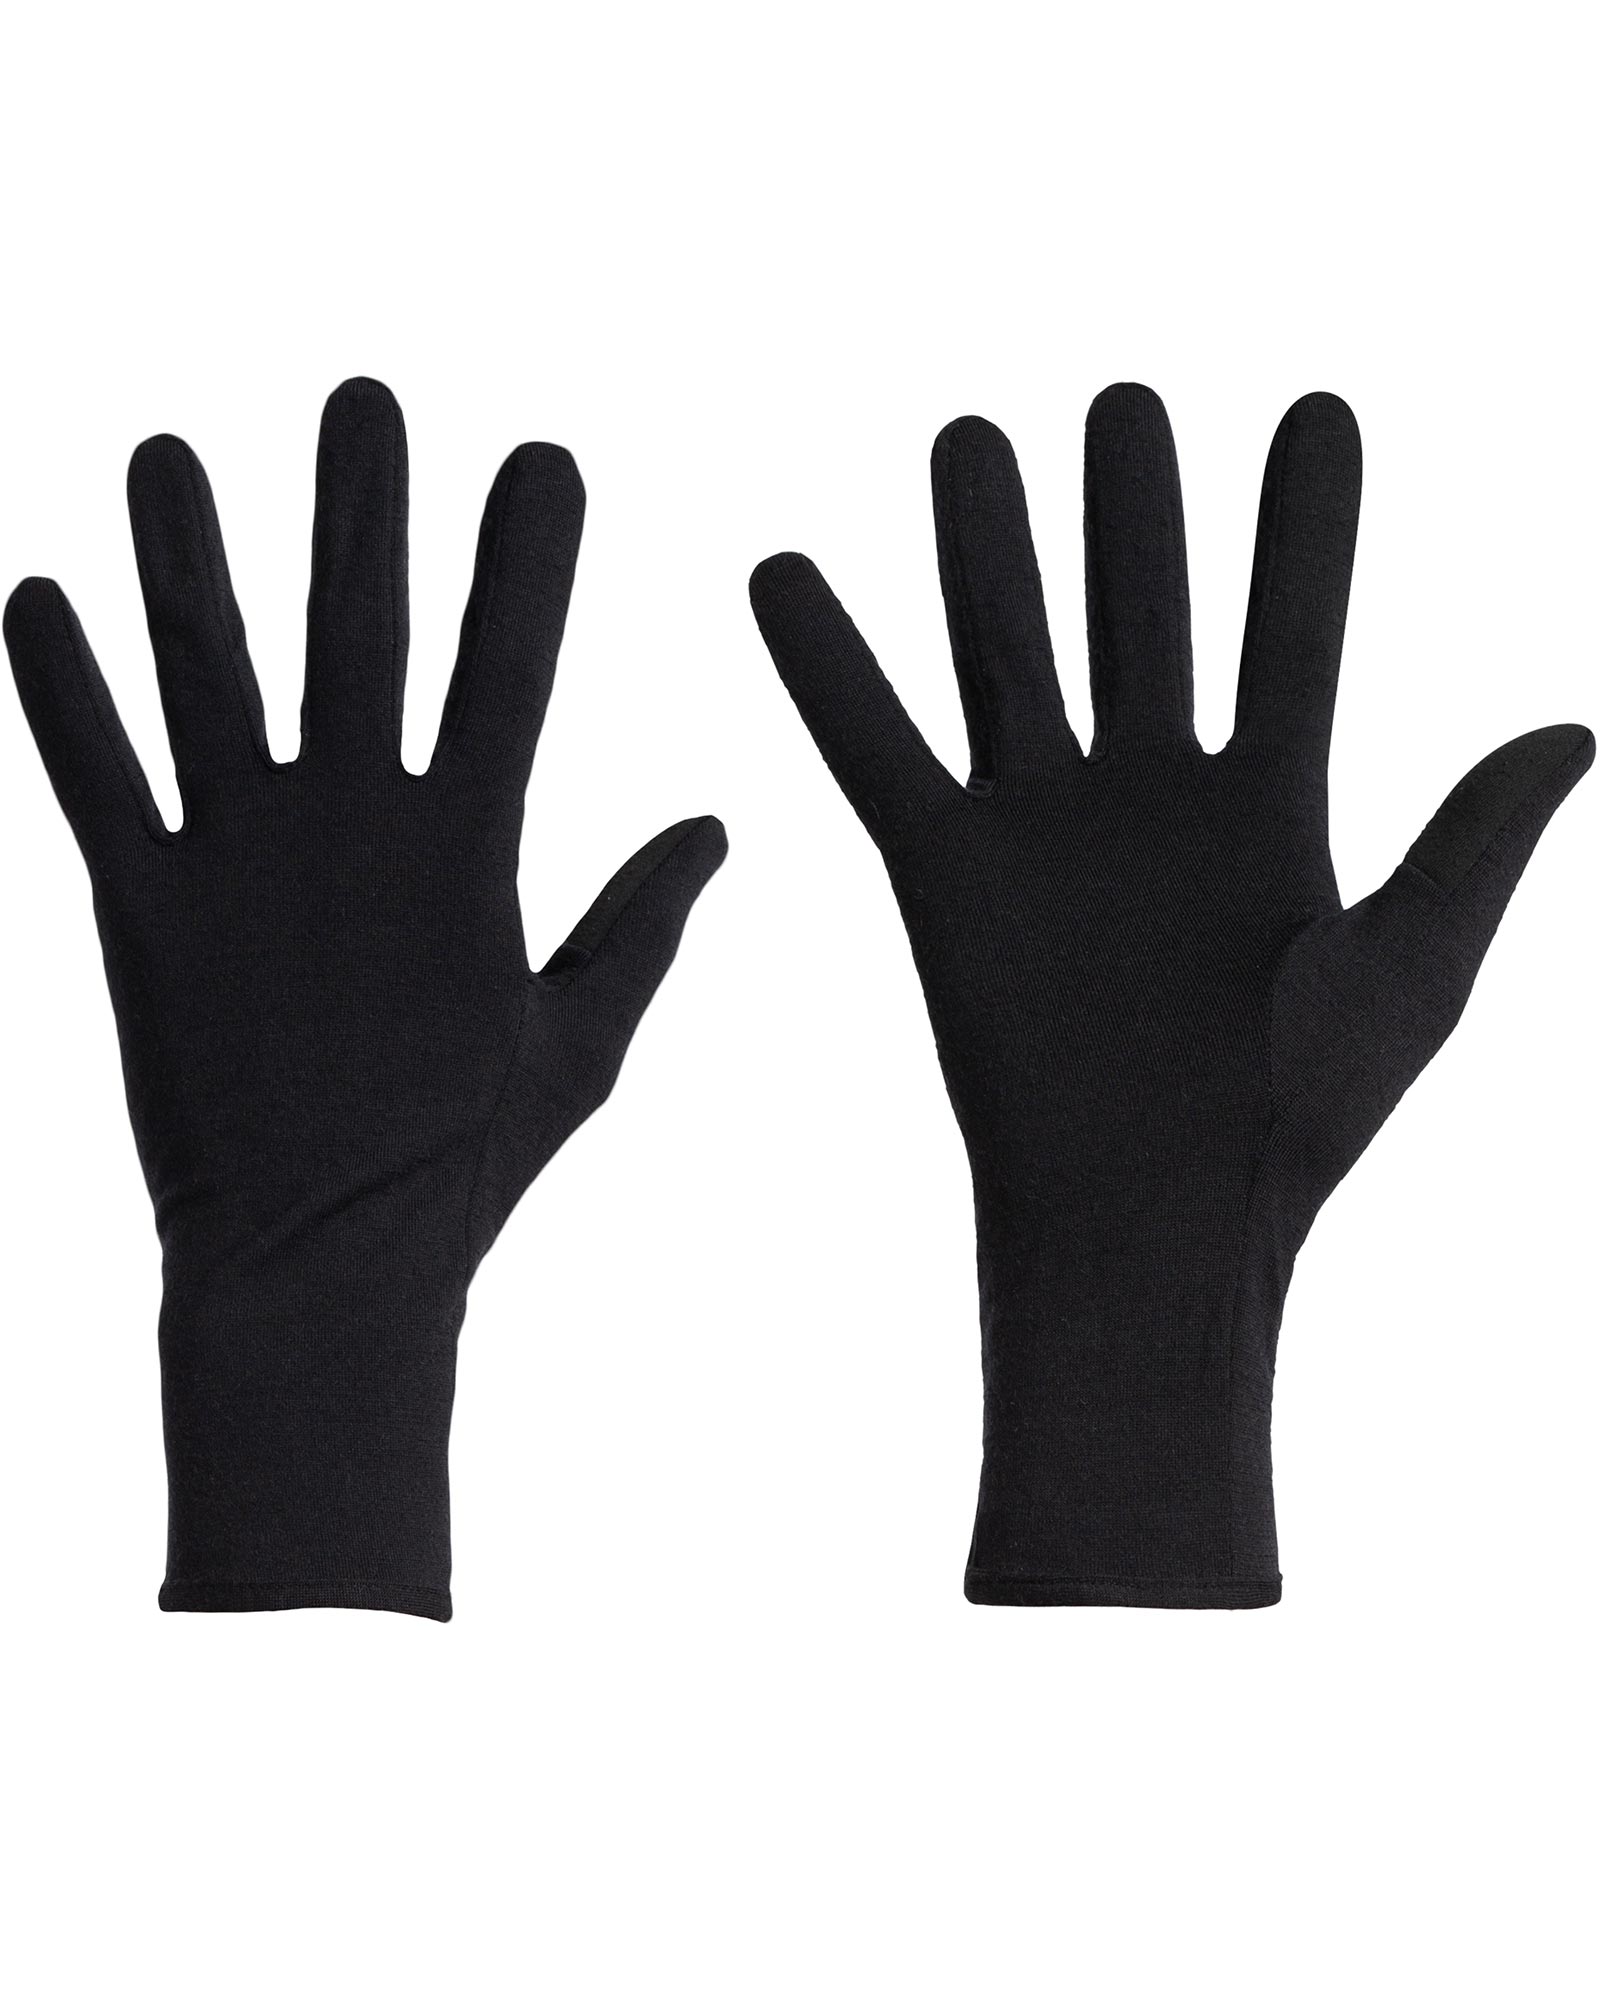 icebreaker Merino 260 Tech Glove Liners - black XS